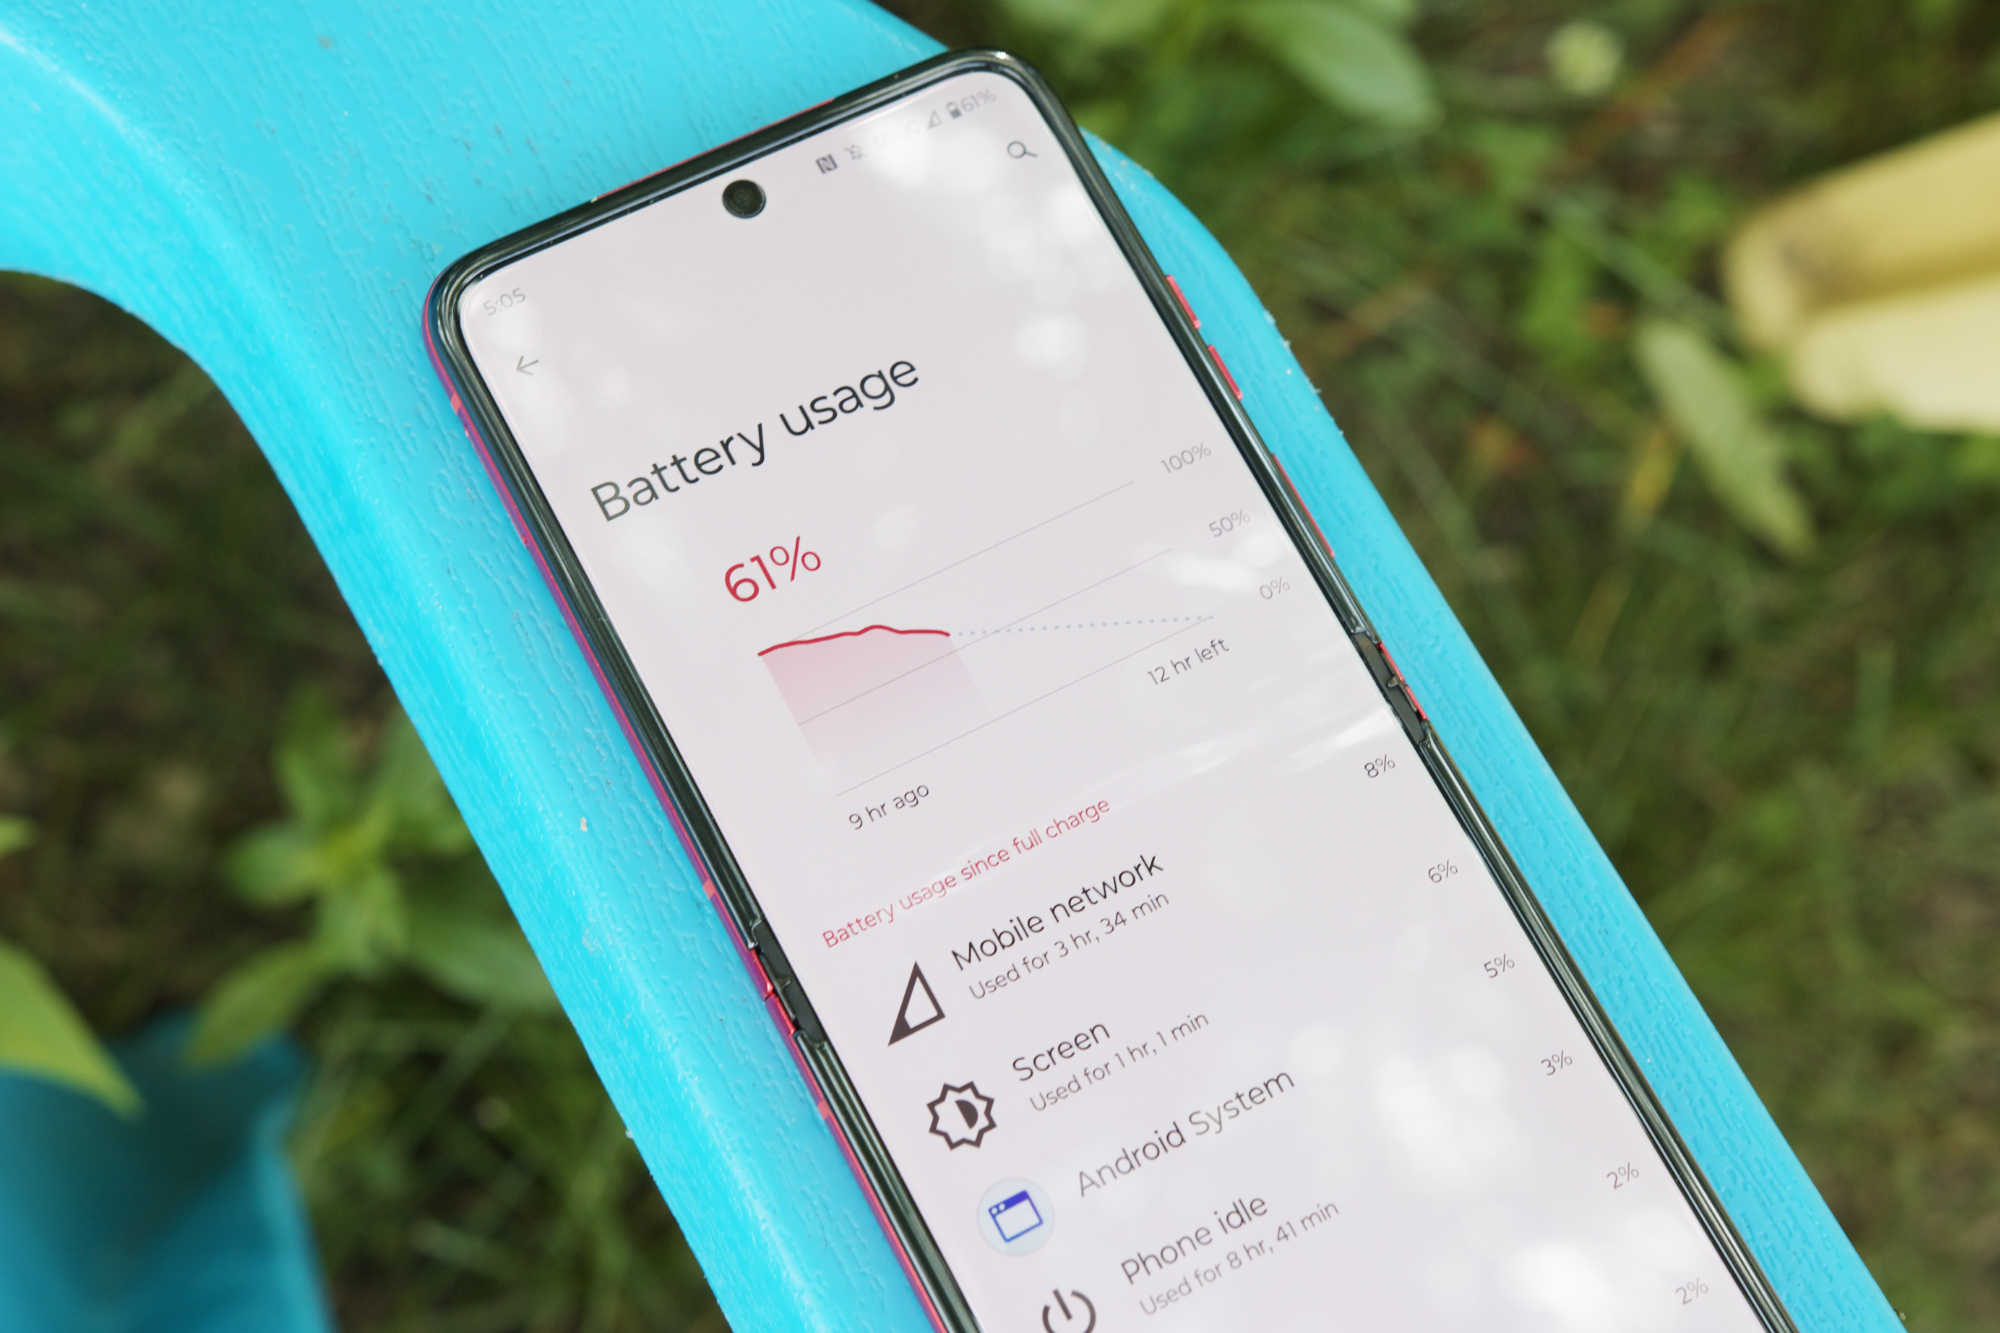 Battery usage settings on the Motorola Razr Plus.